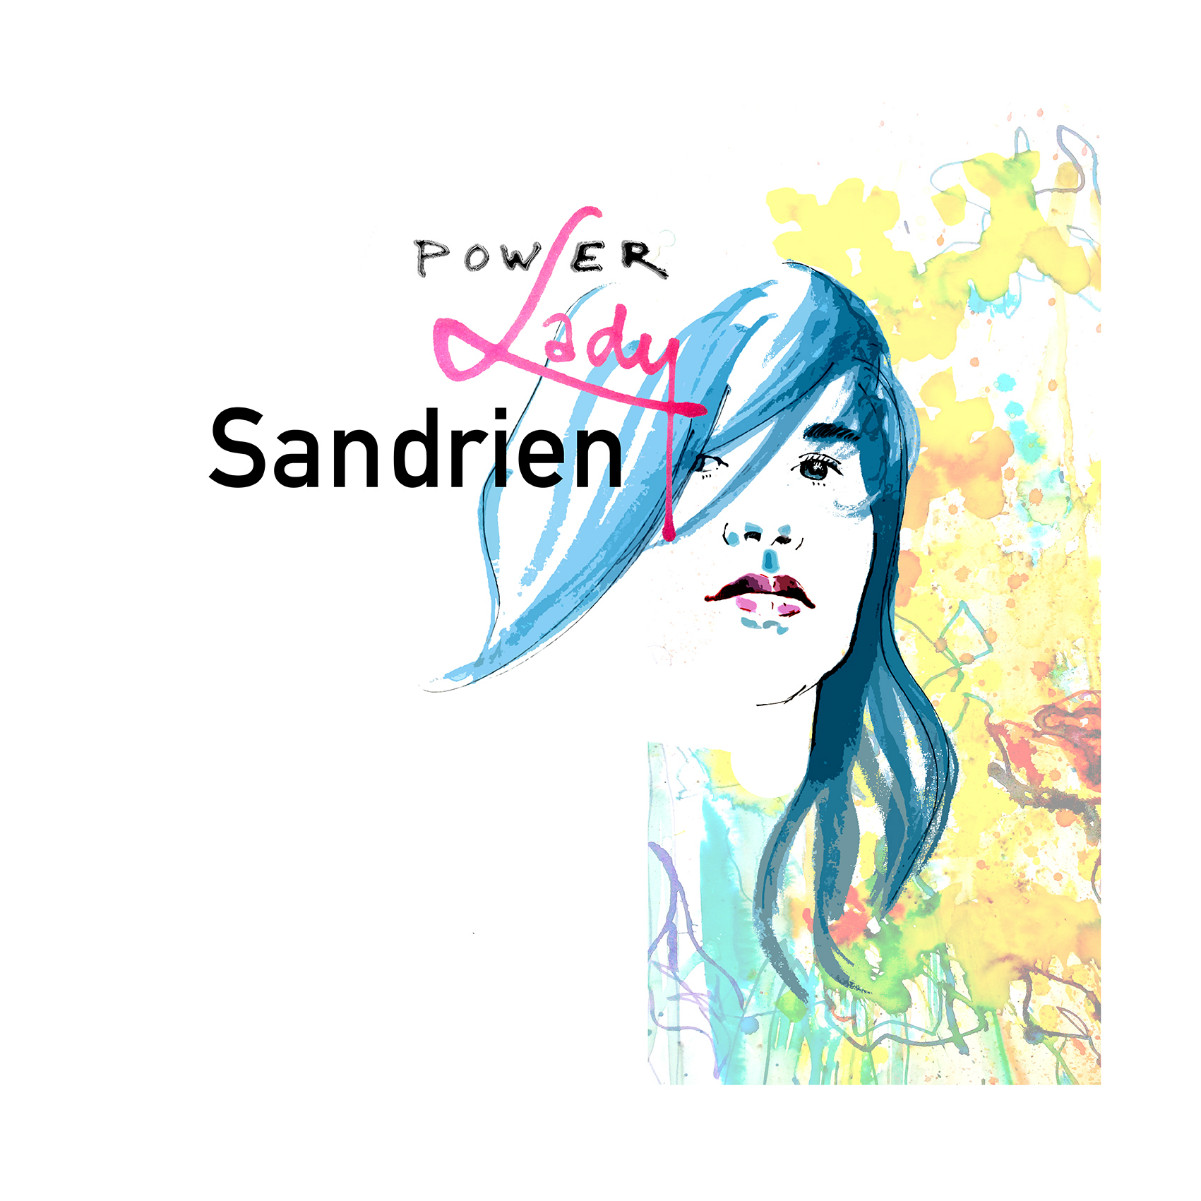 DJ Sandrien Power Lady